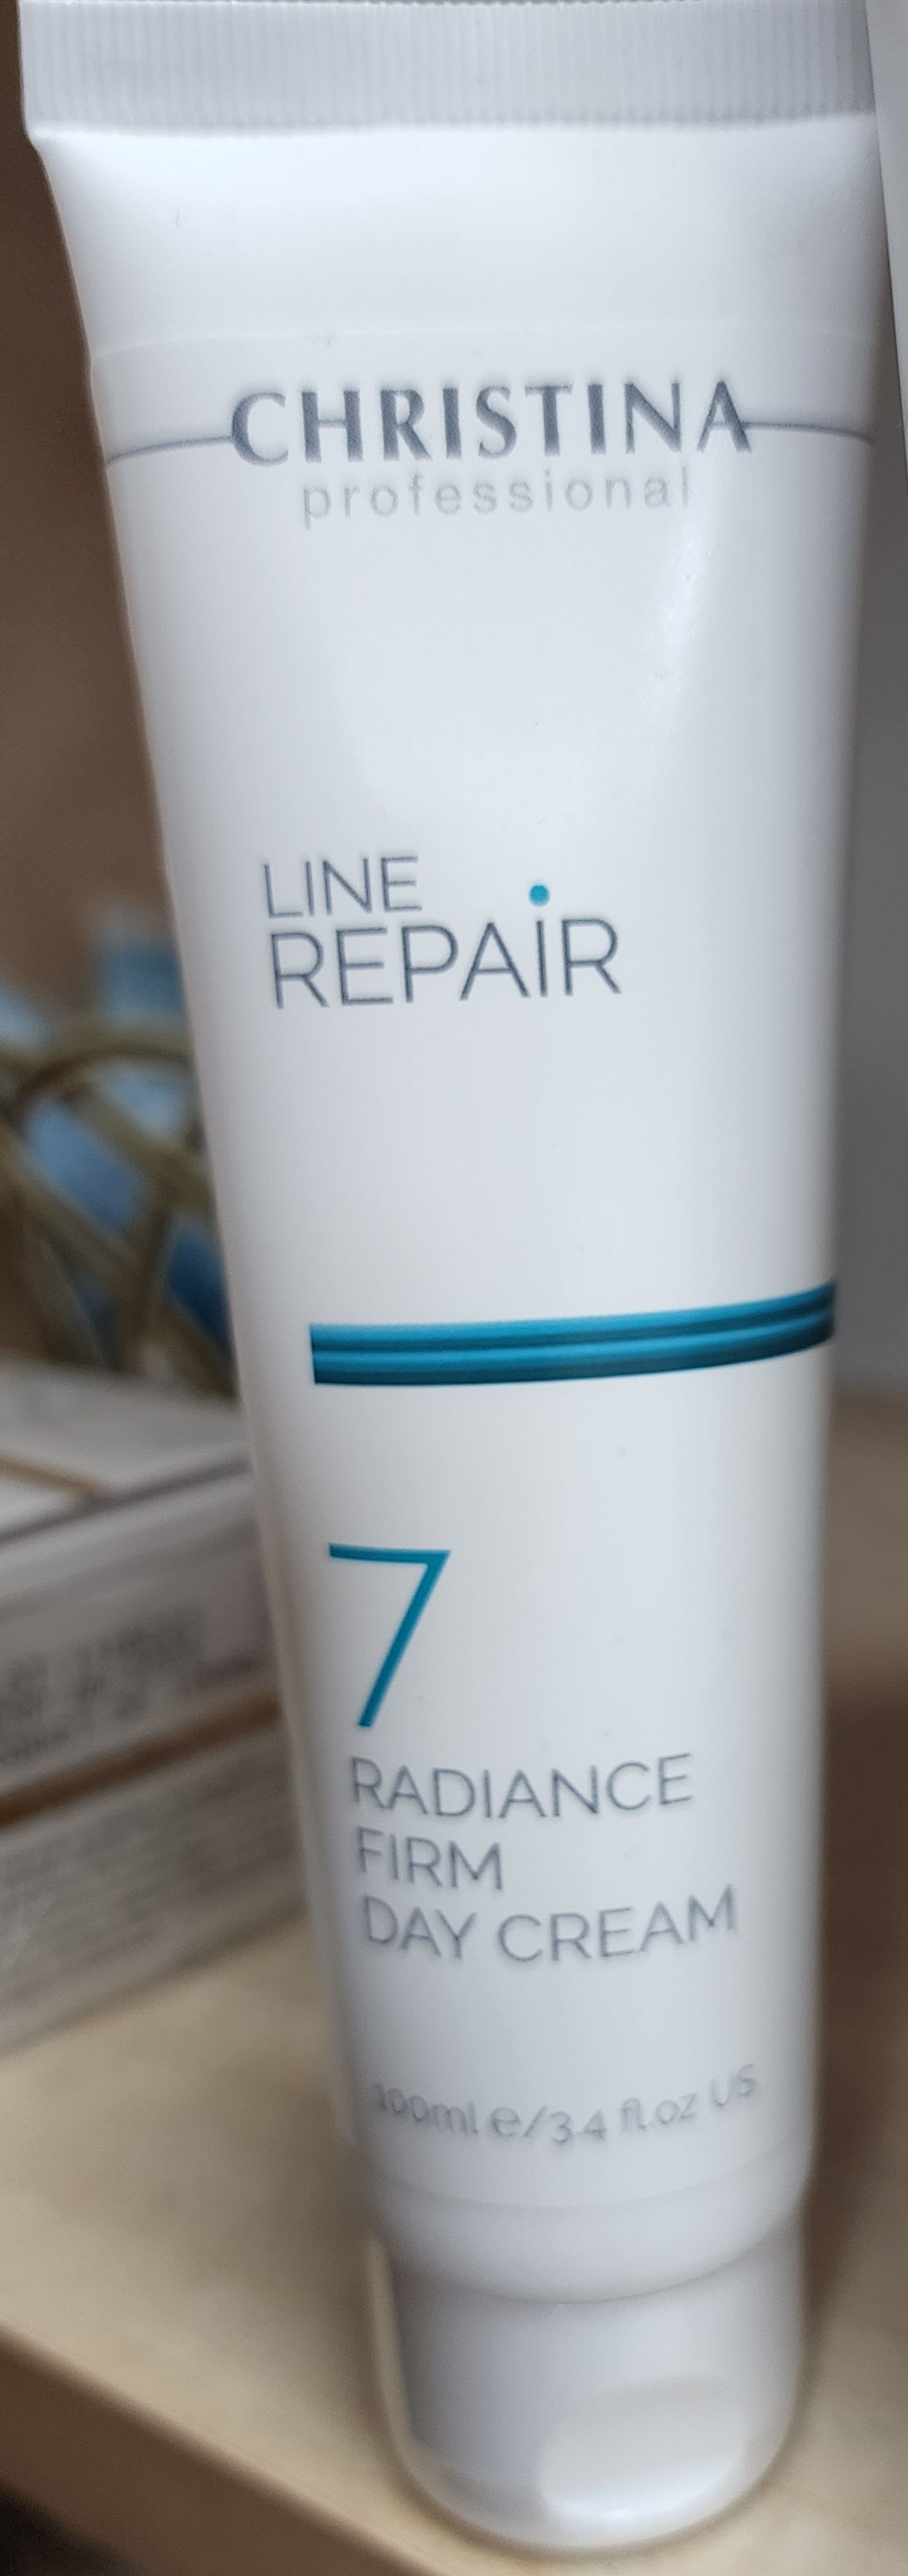 Christina Line repair step 7 Radiance Firm Day Cream 100ml